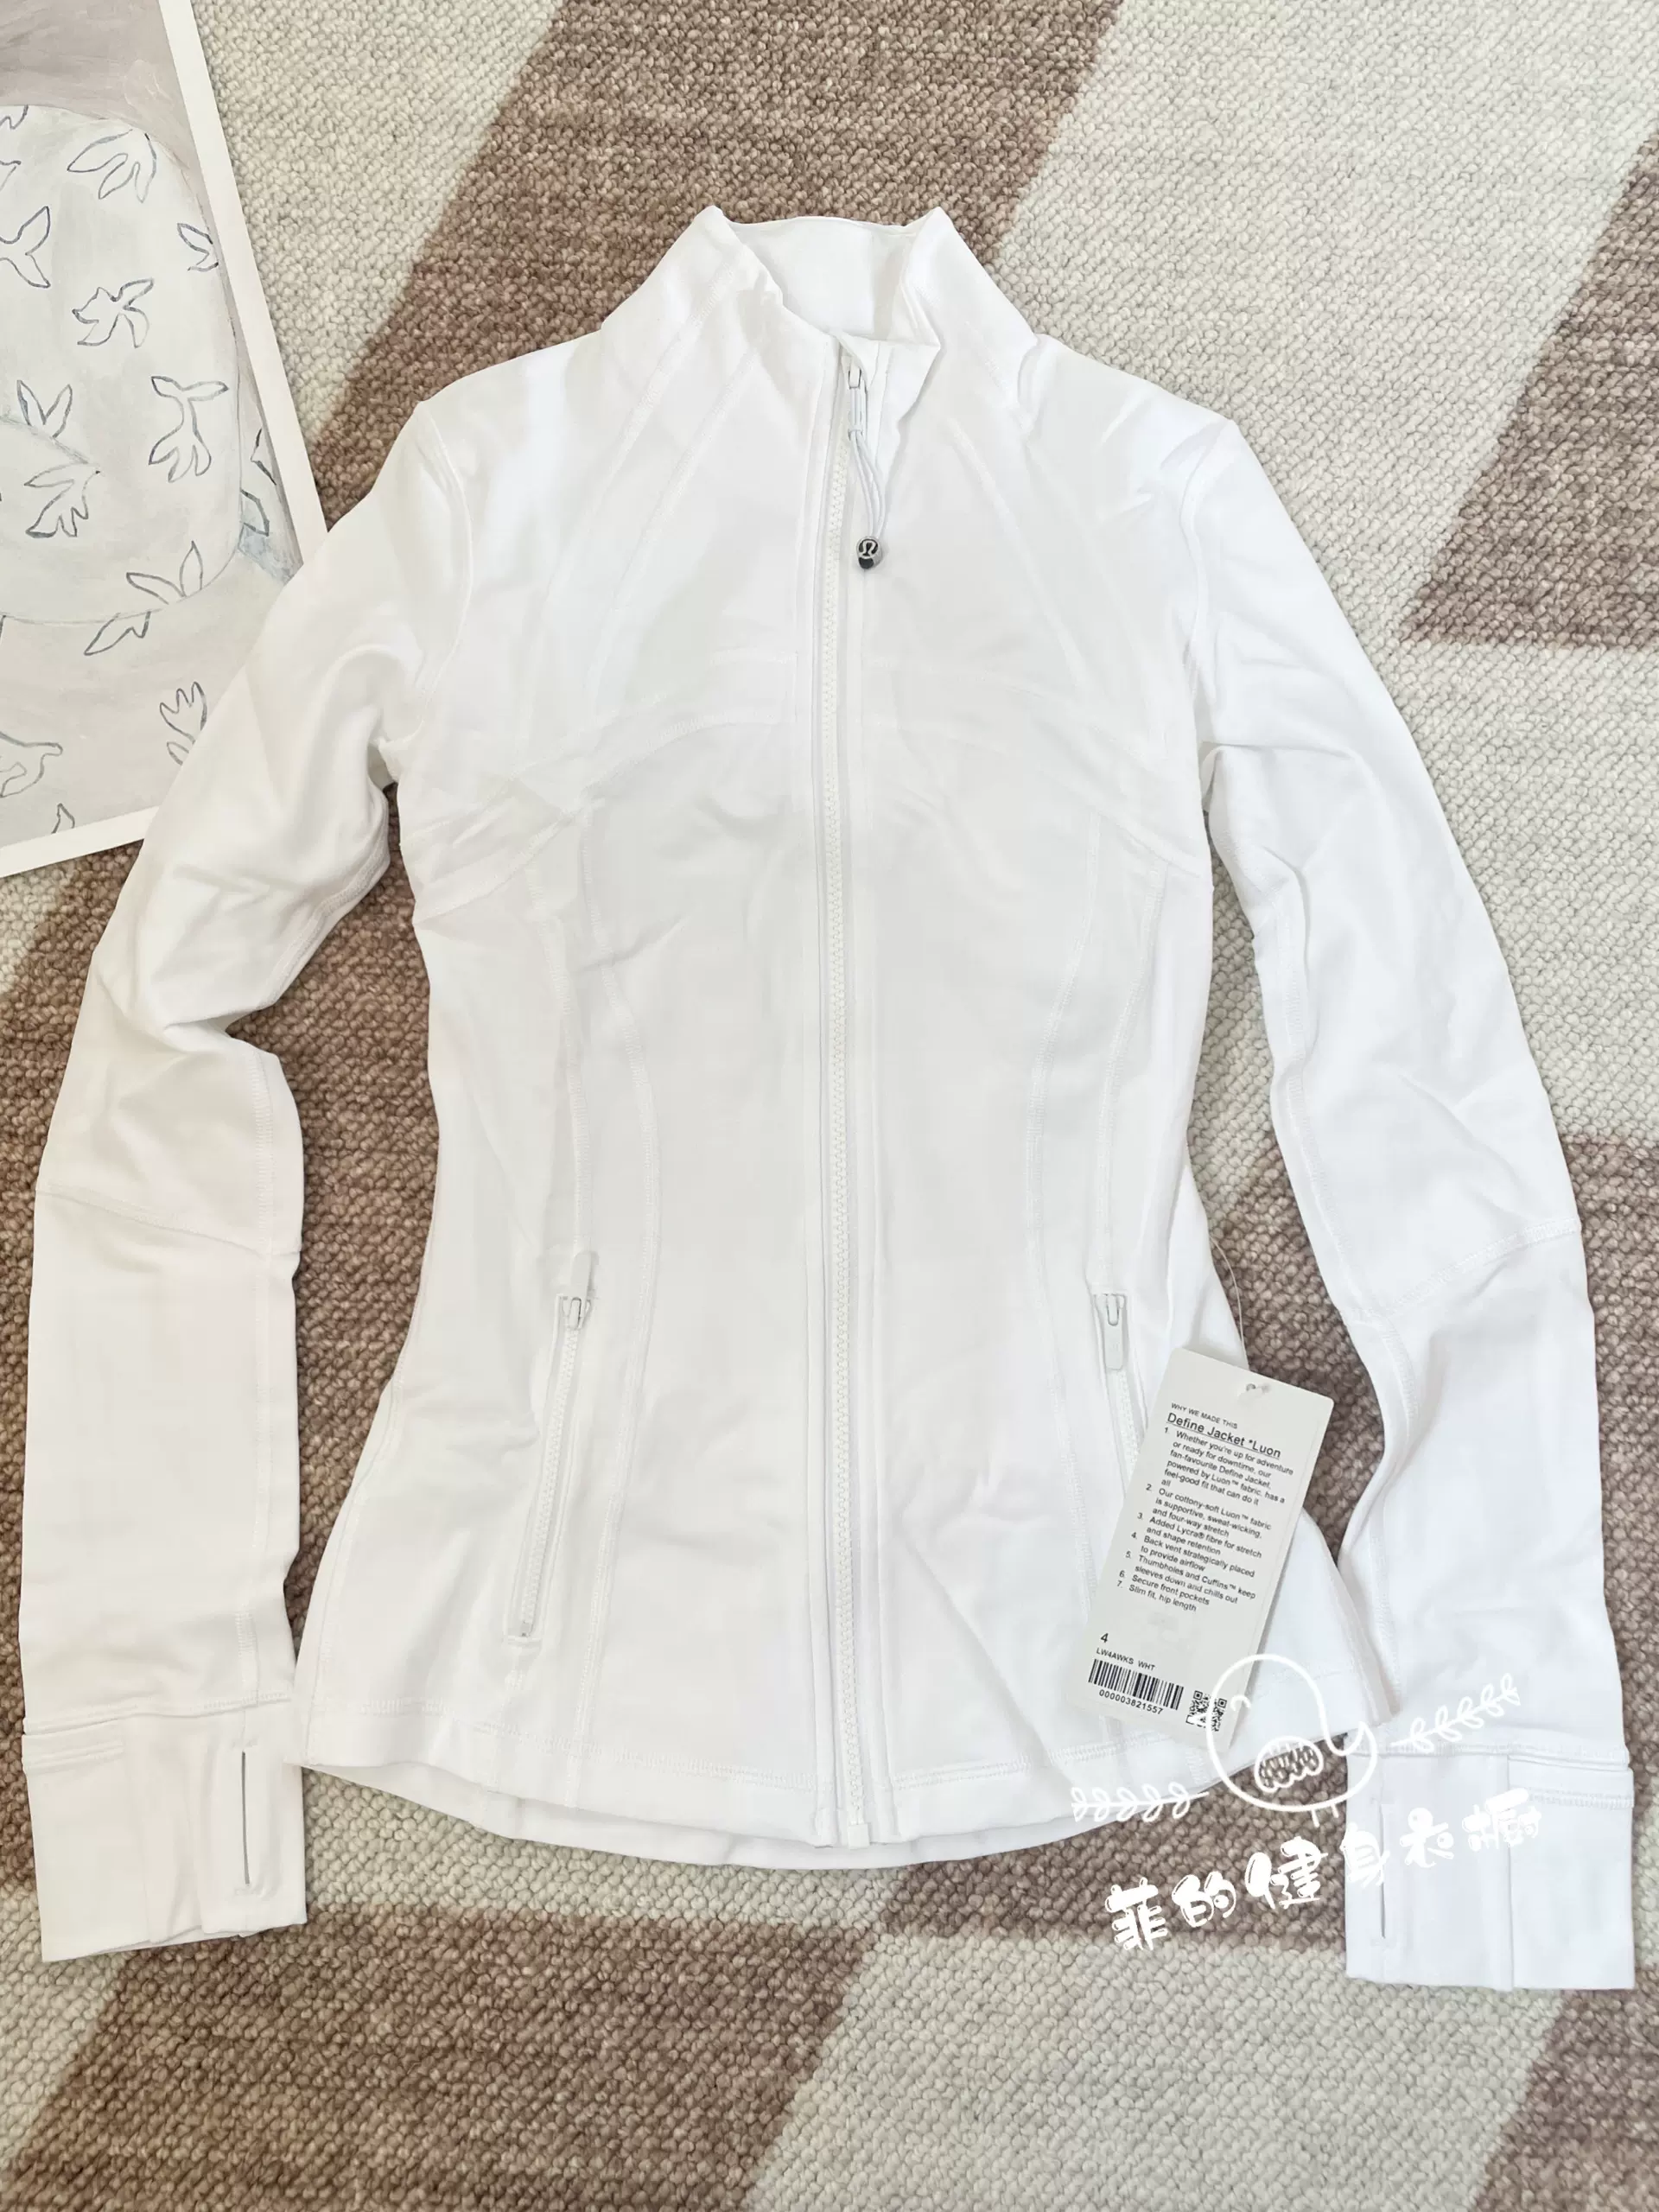 部分现货Lululemon Define Jacket 经典瑜伽运动修身外套夹克-Taobao